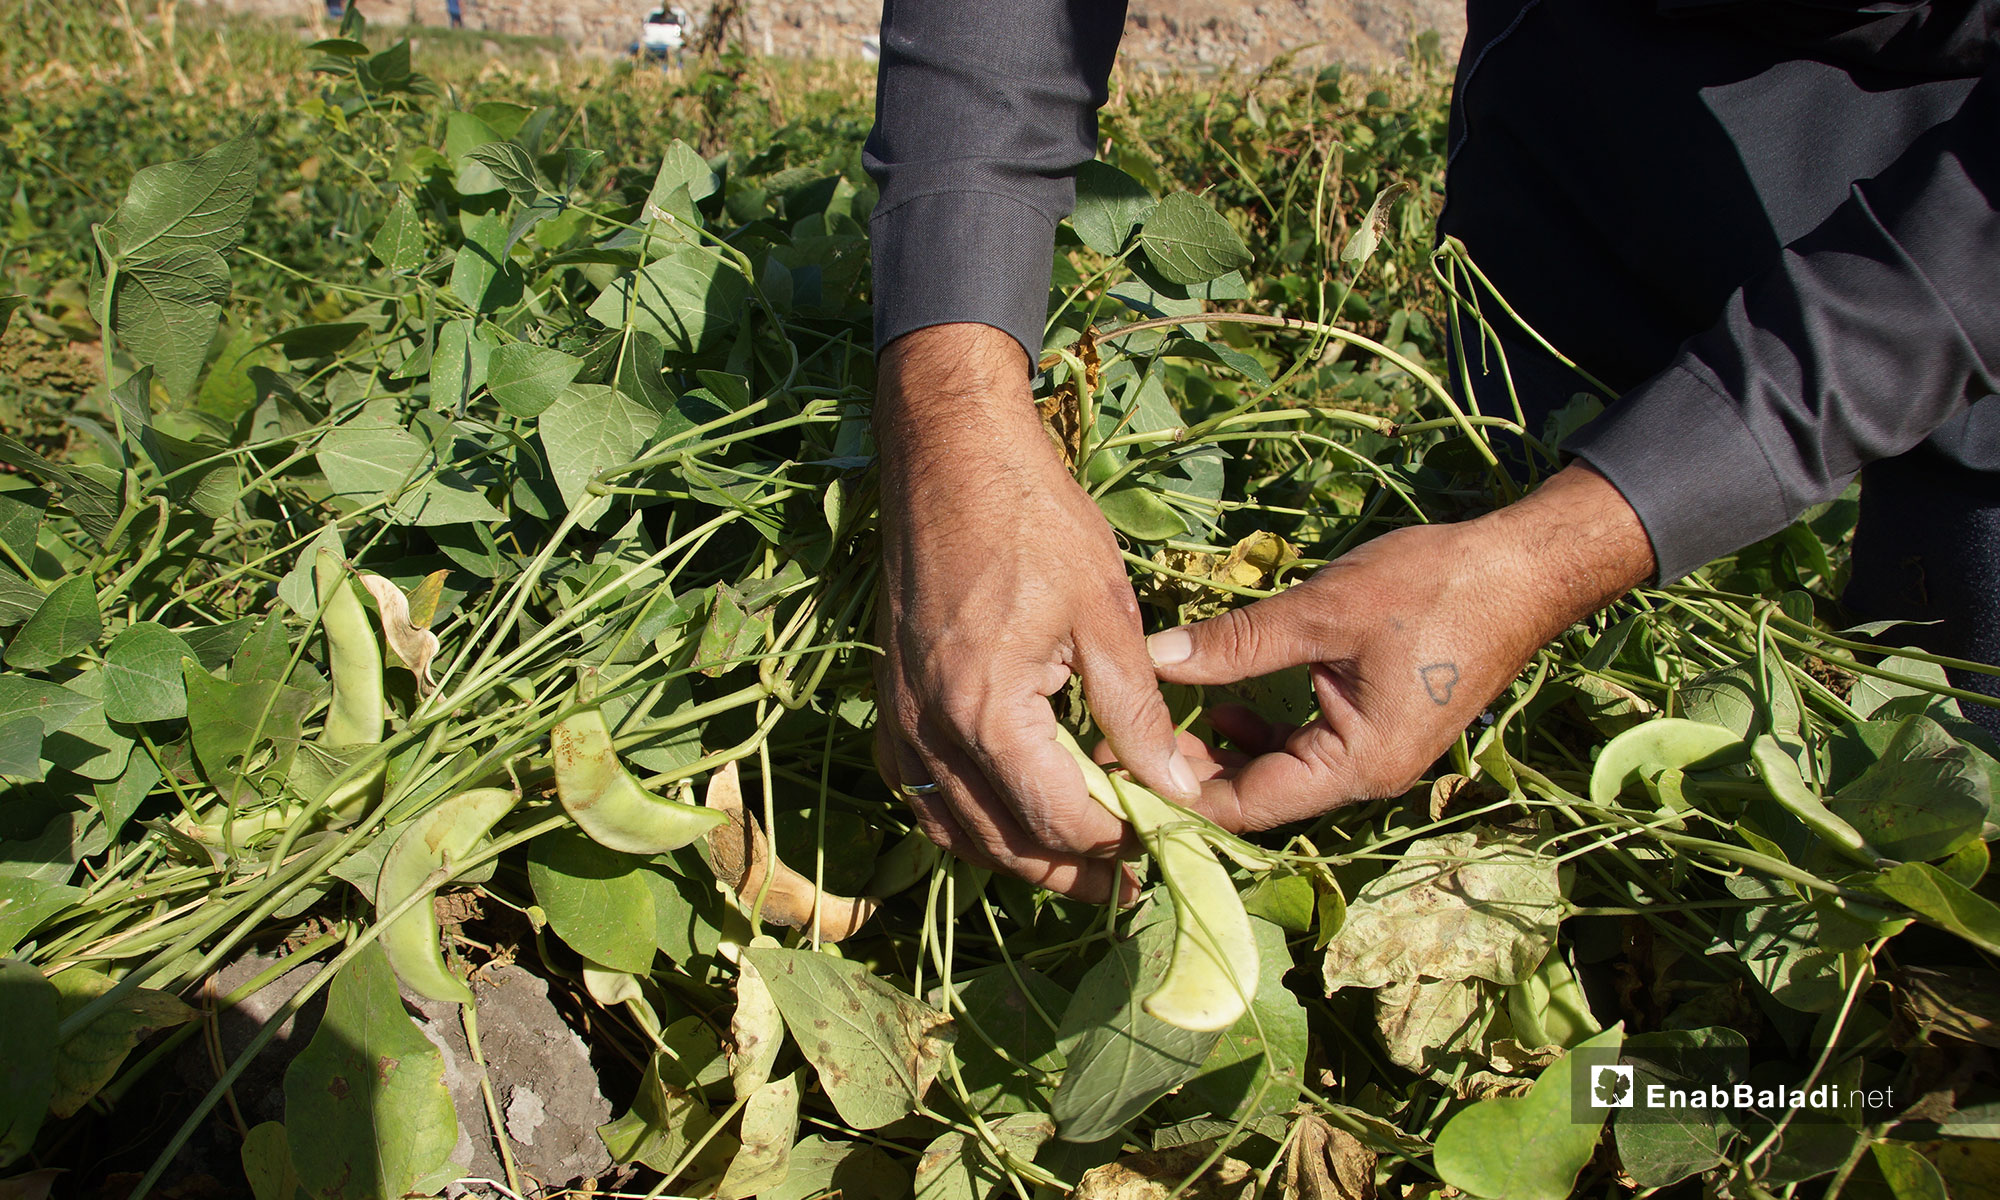 Kidney beans being harvested in the al-Ghab Plain, rural Hama – 31 October 2018 (Enab Baladi)